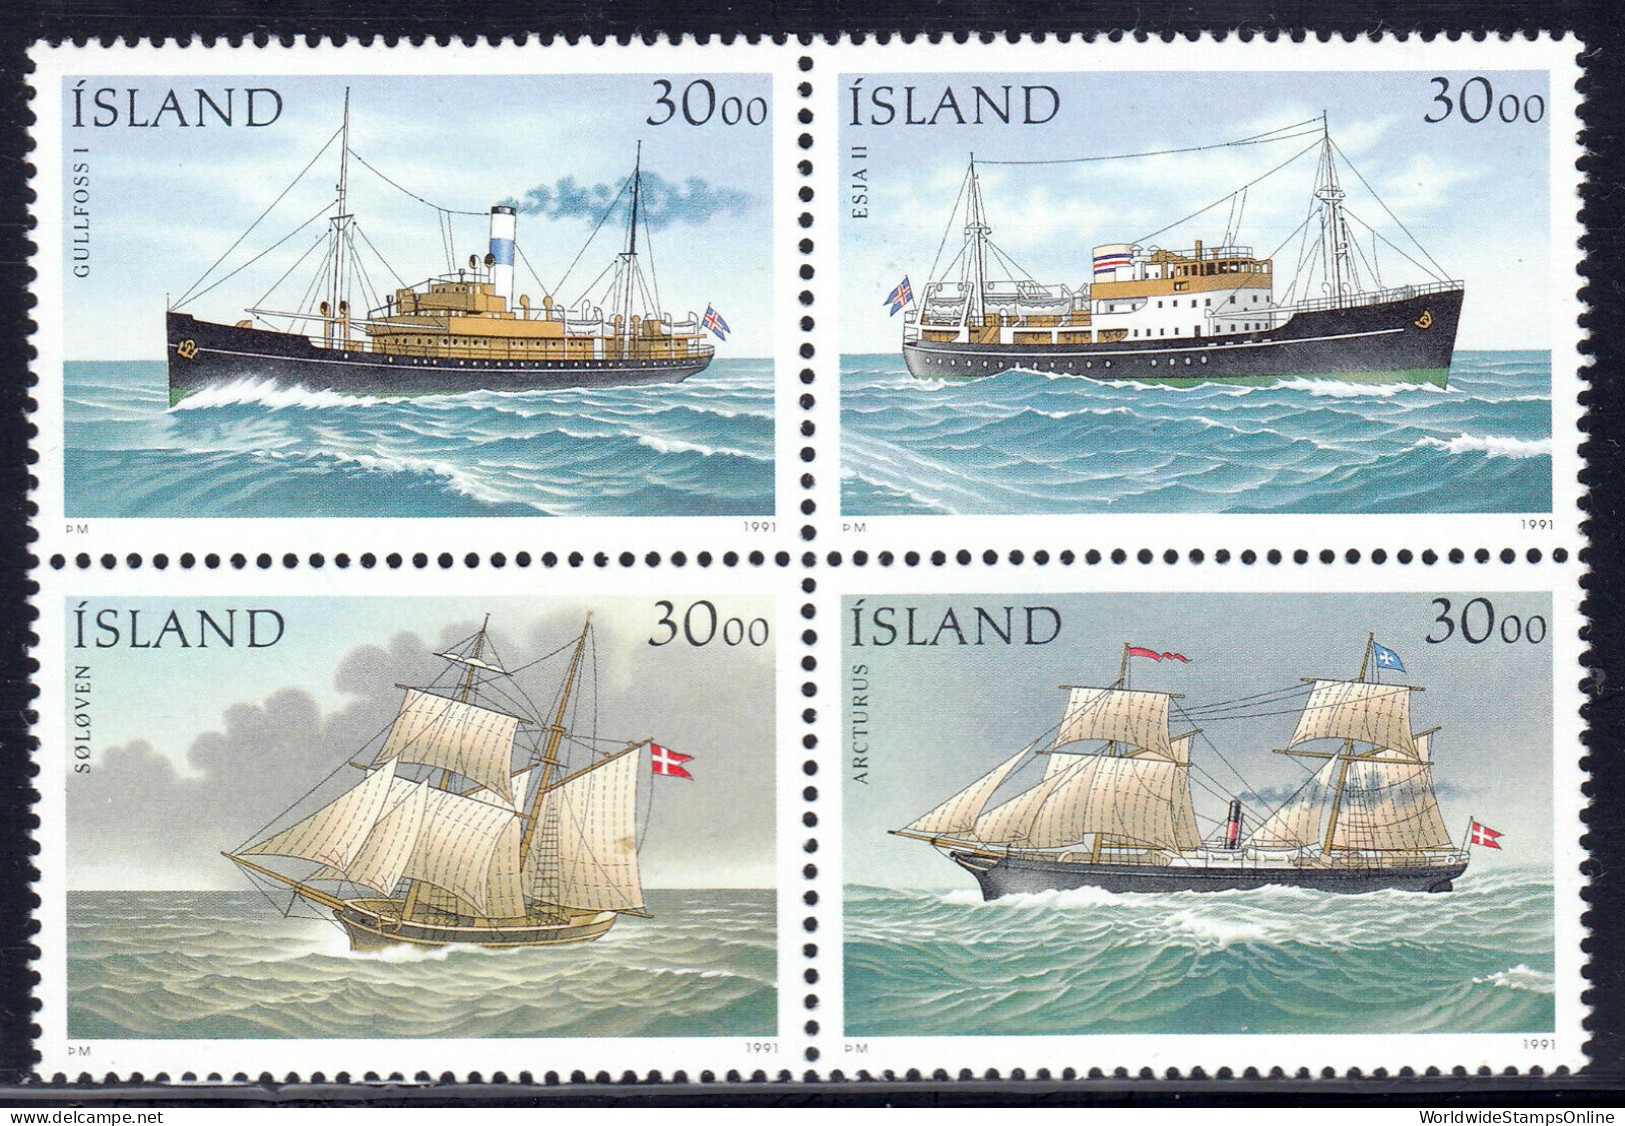 ICELAND — SCOTT 745 — 1991 SHIPS SE-TENANT SET — MNH — SCV $20 - Storia Postale